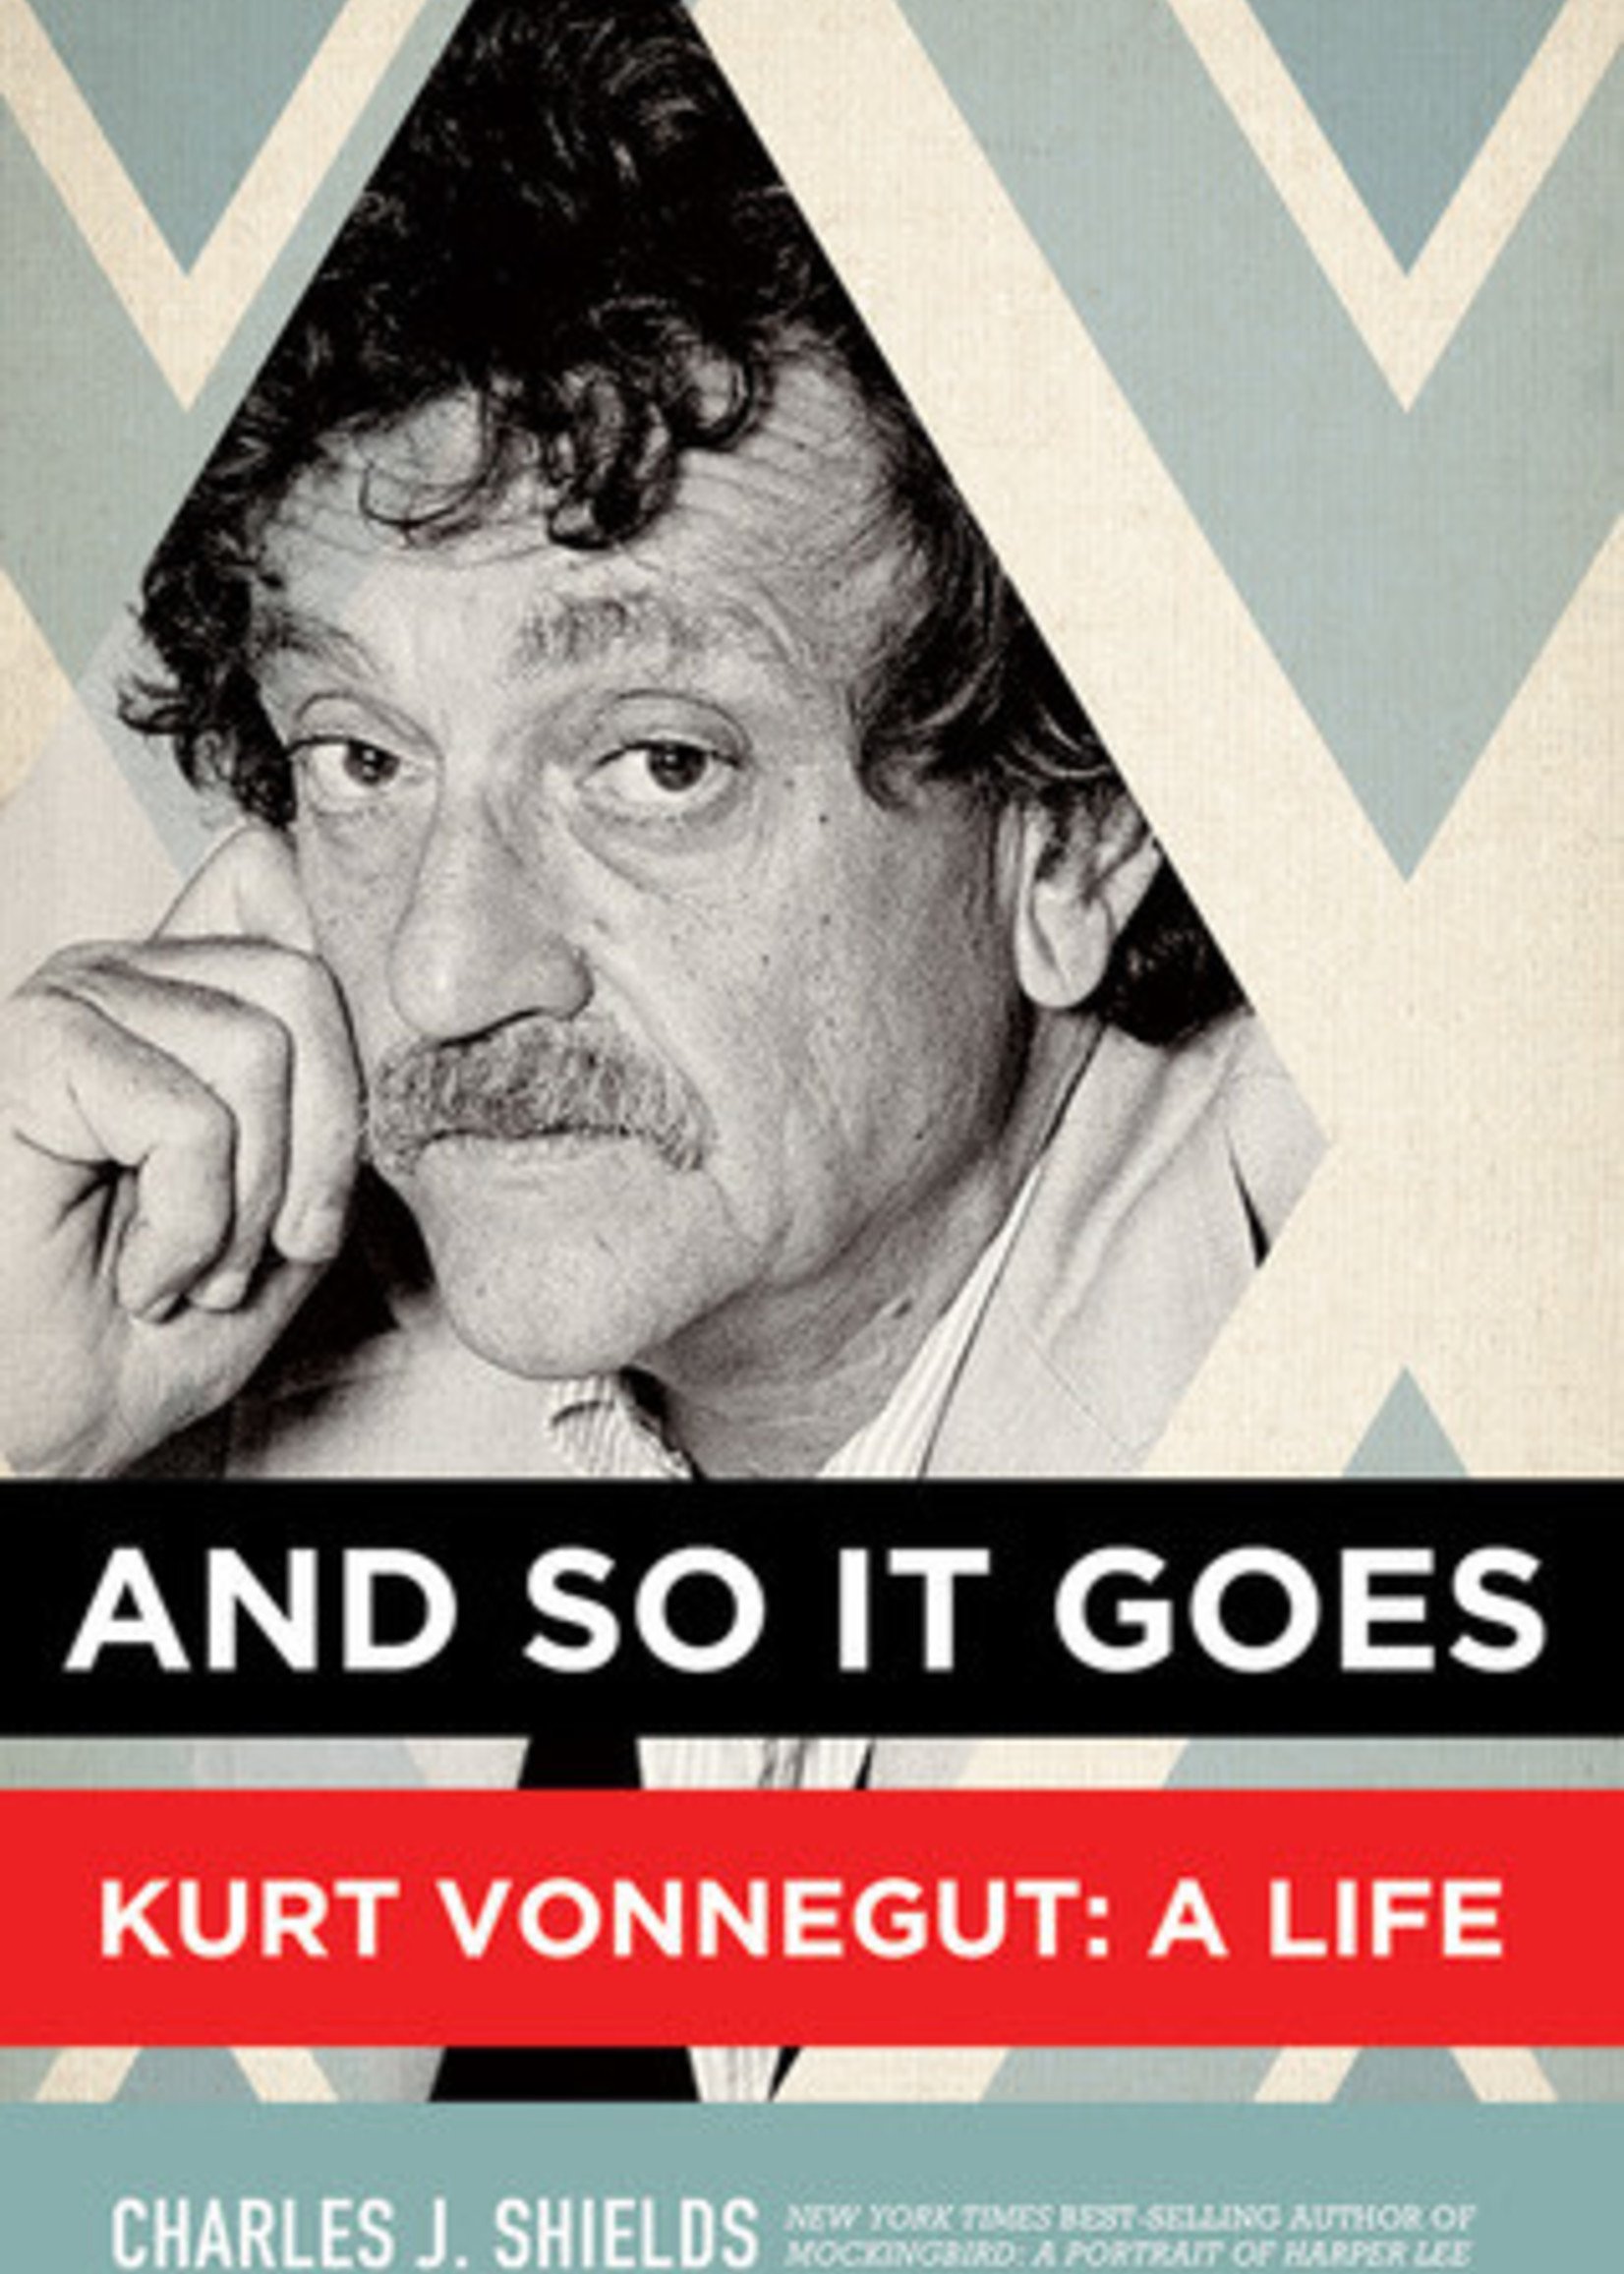 And So It Goes: Kurt Vonnegut: A Life bh Charles J. Shield